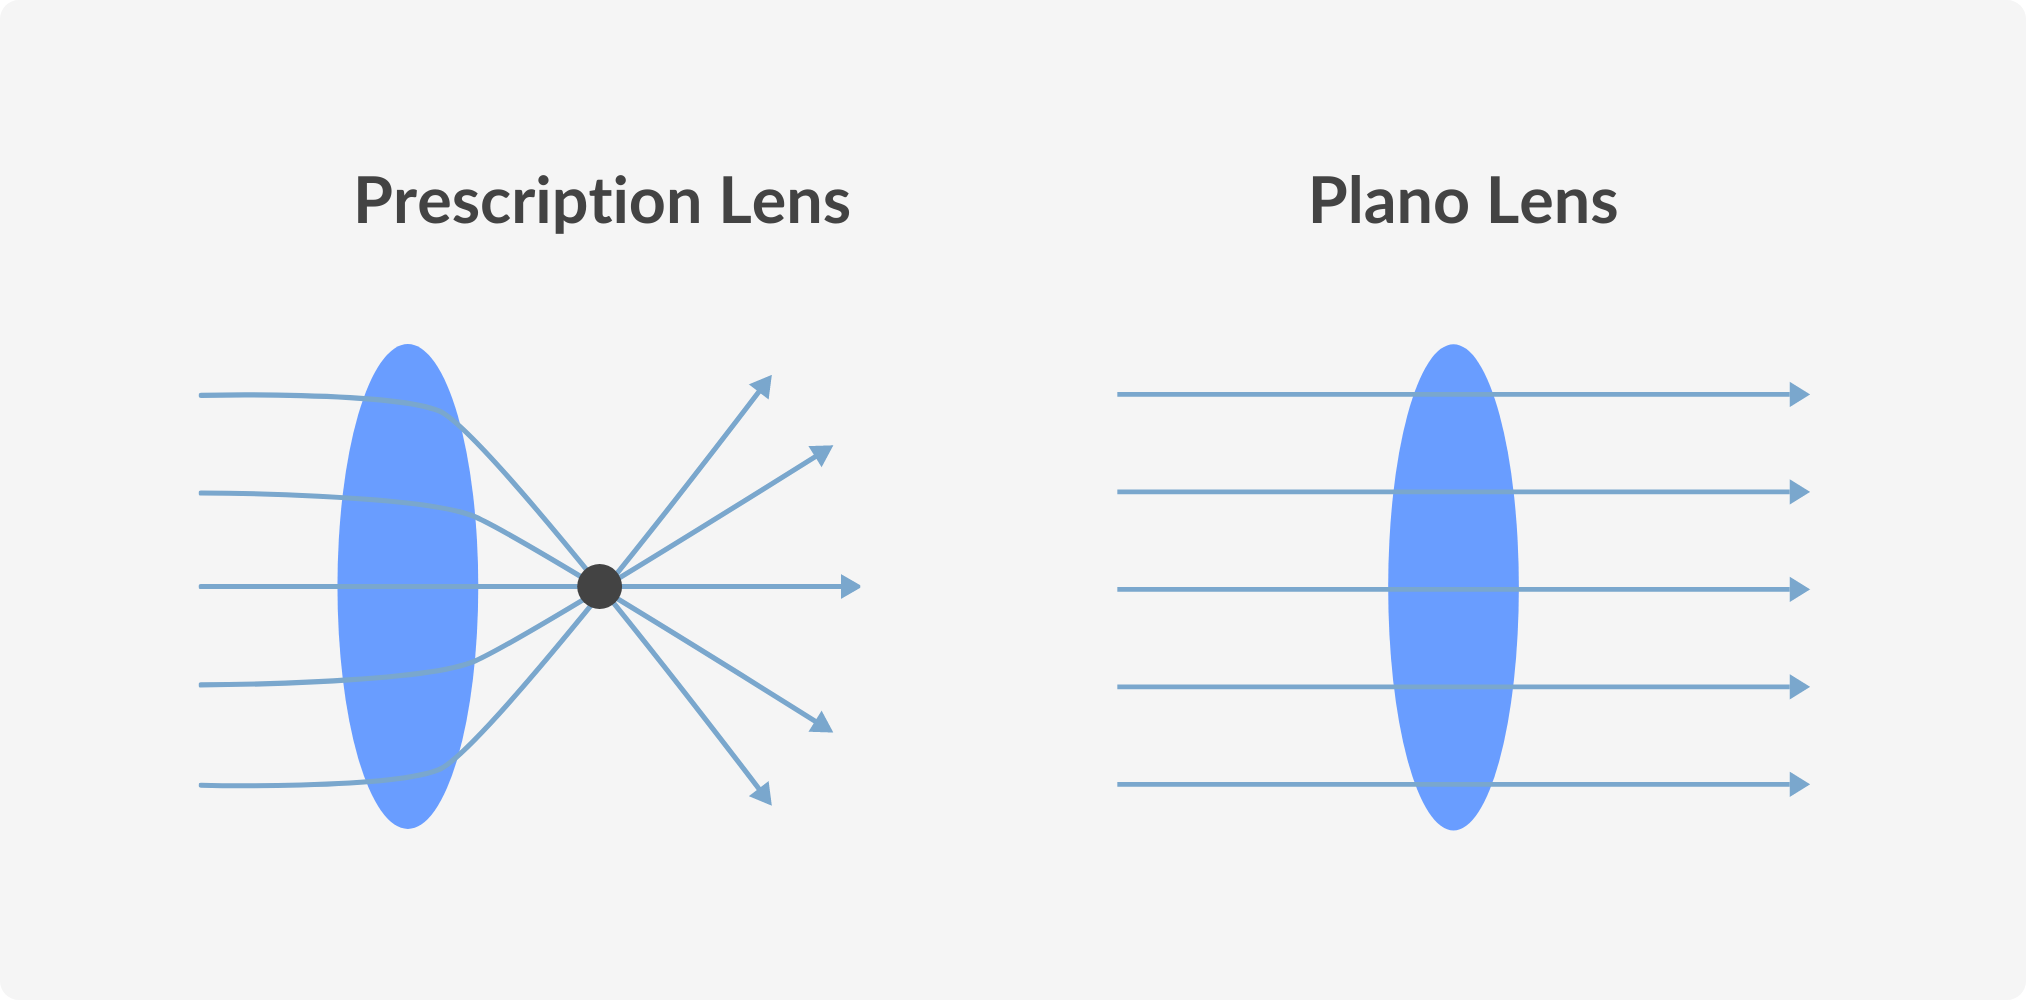 plano lens refraction